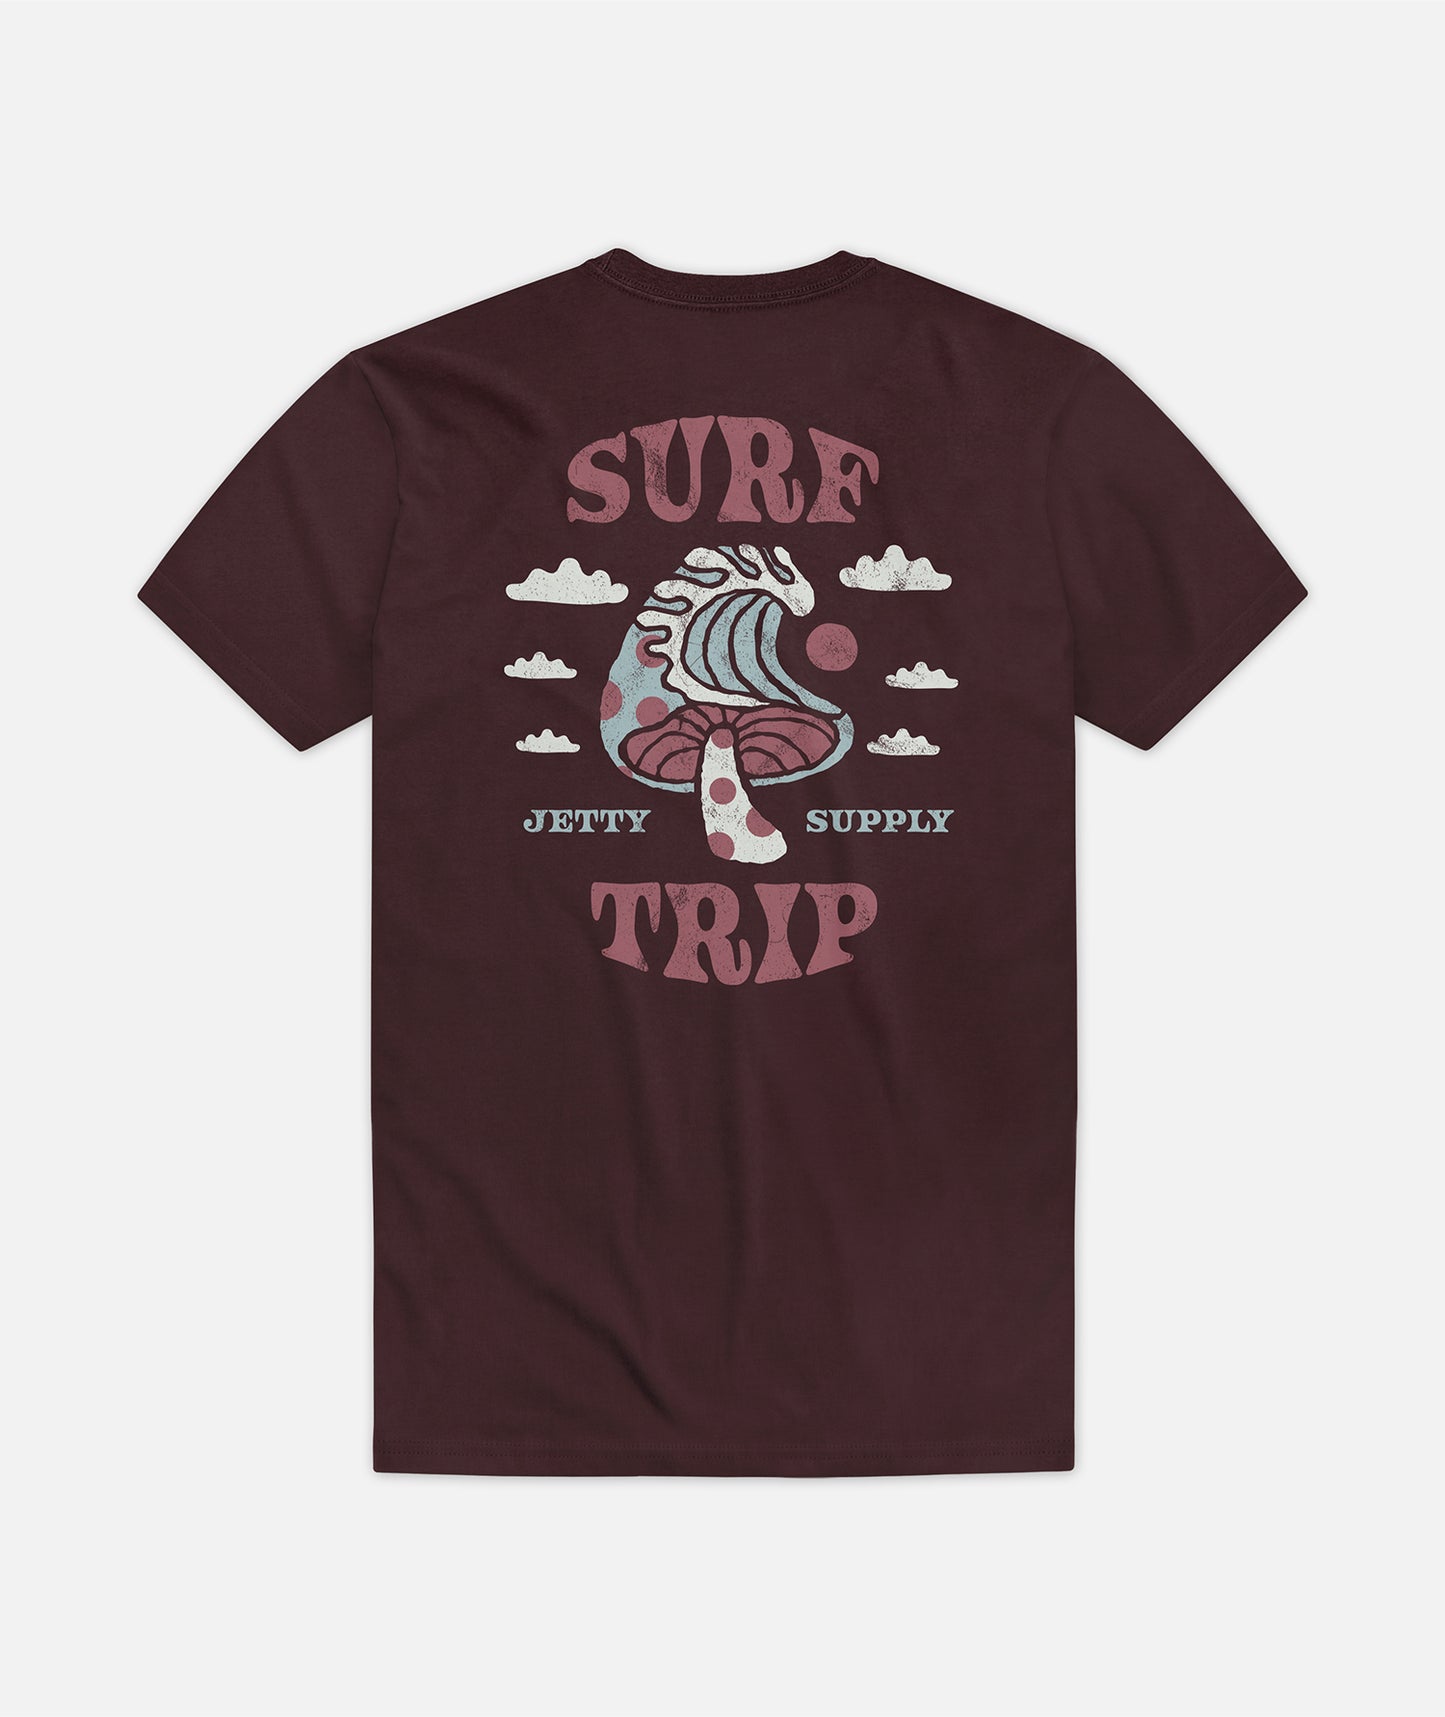 Surf Trip Tee - Oxblood